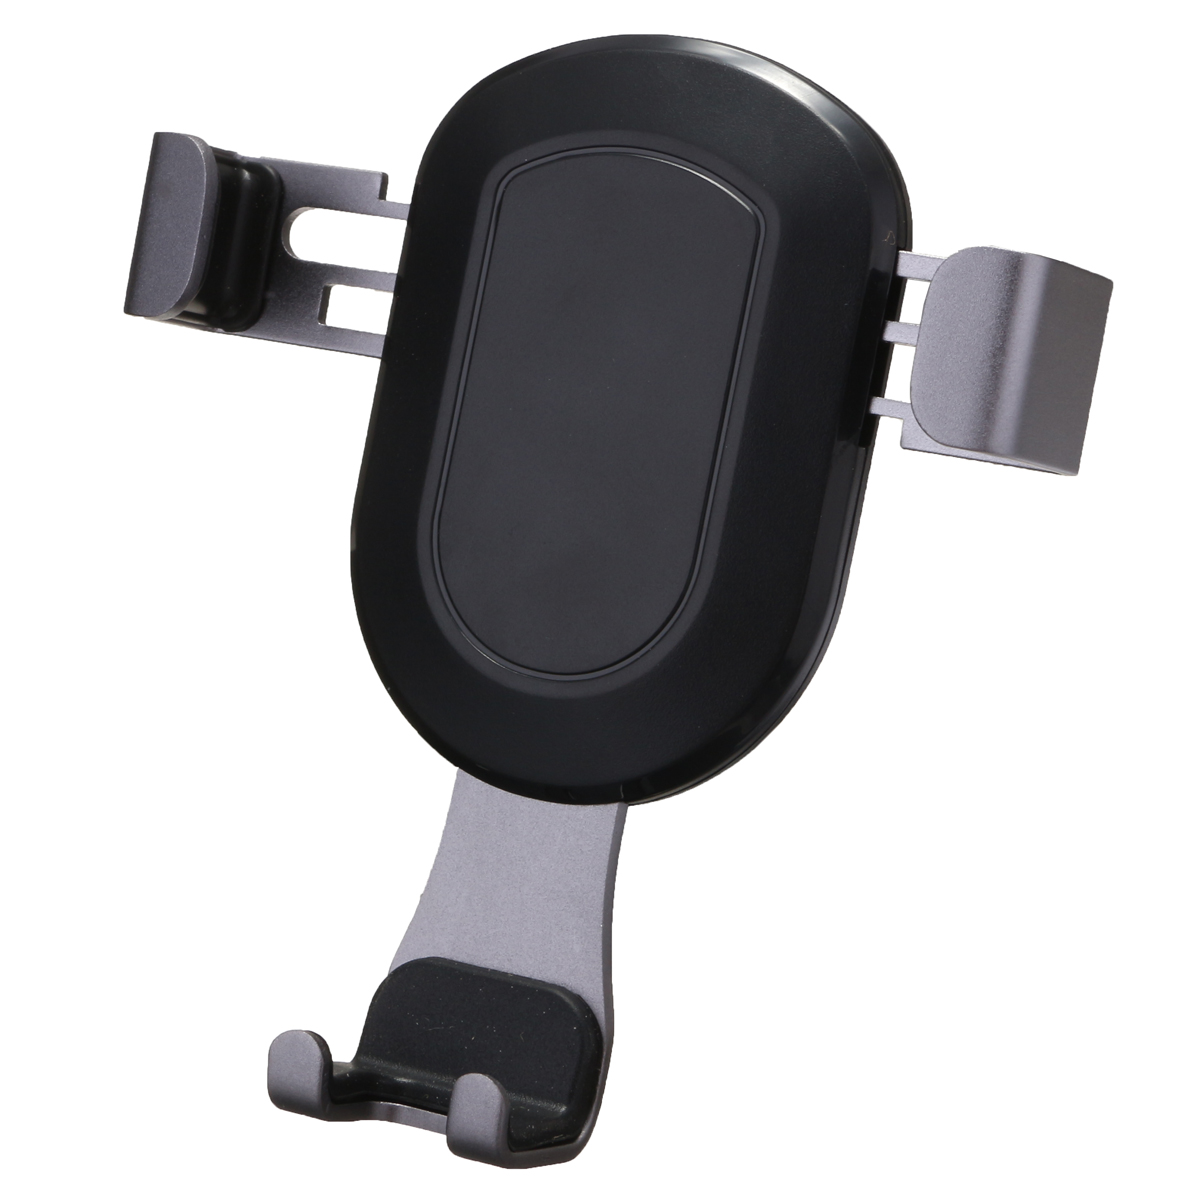 

Universal 360 Degree Rotation Gravity Car Air Vent Holder Phone Clip Mount Bracket for Phone GPS